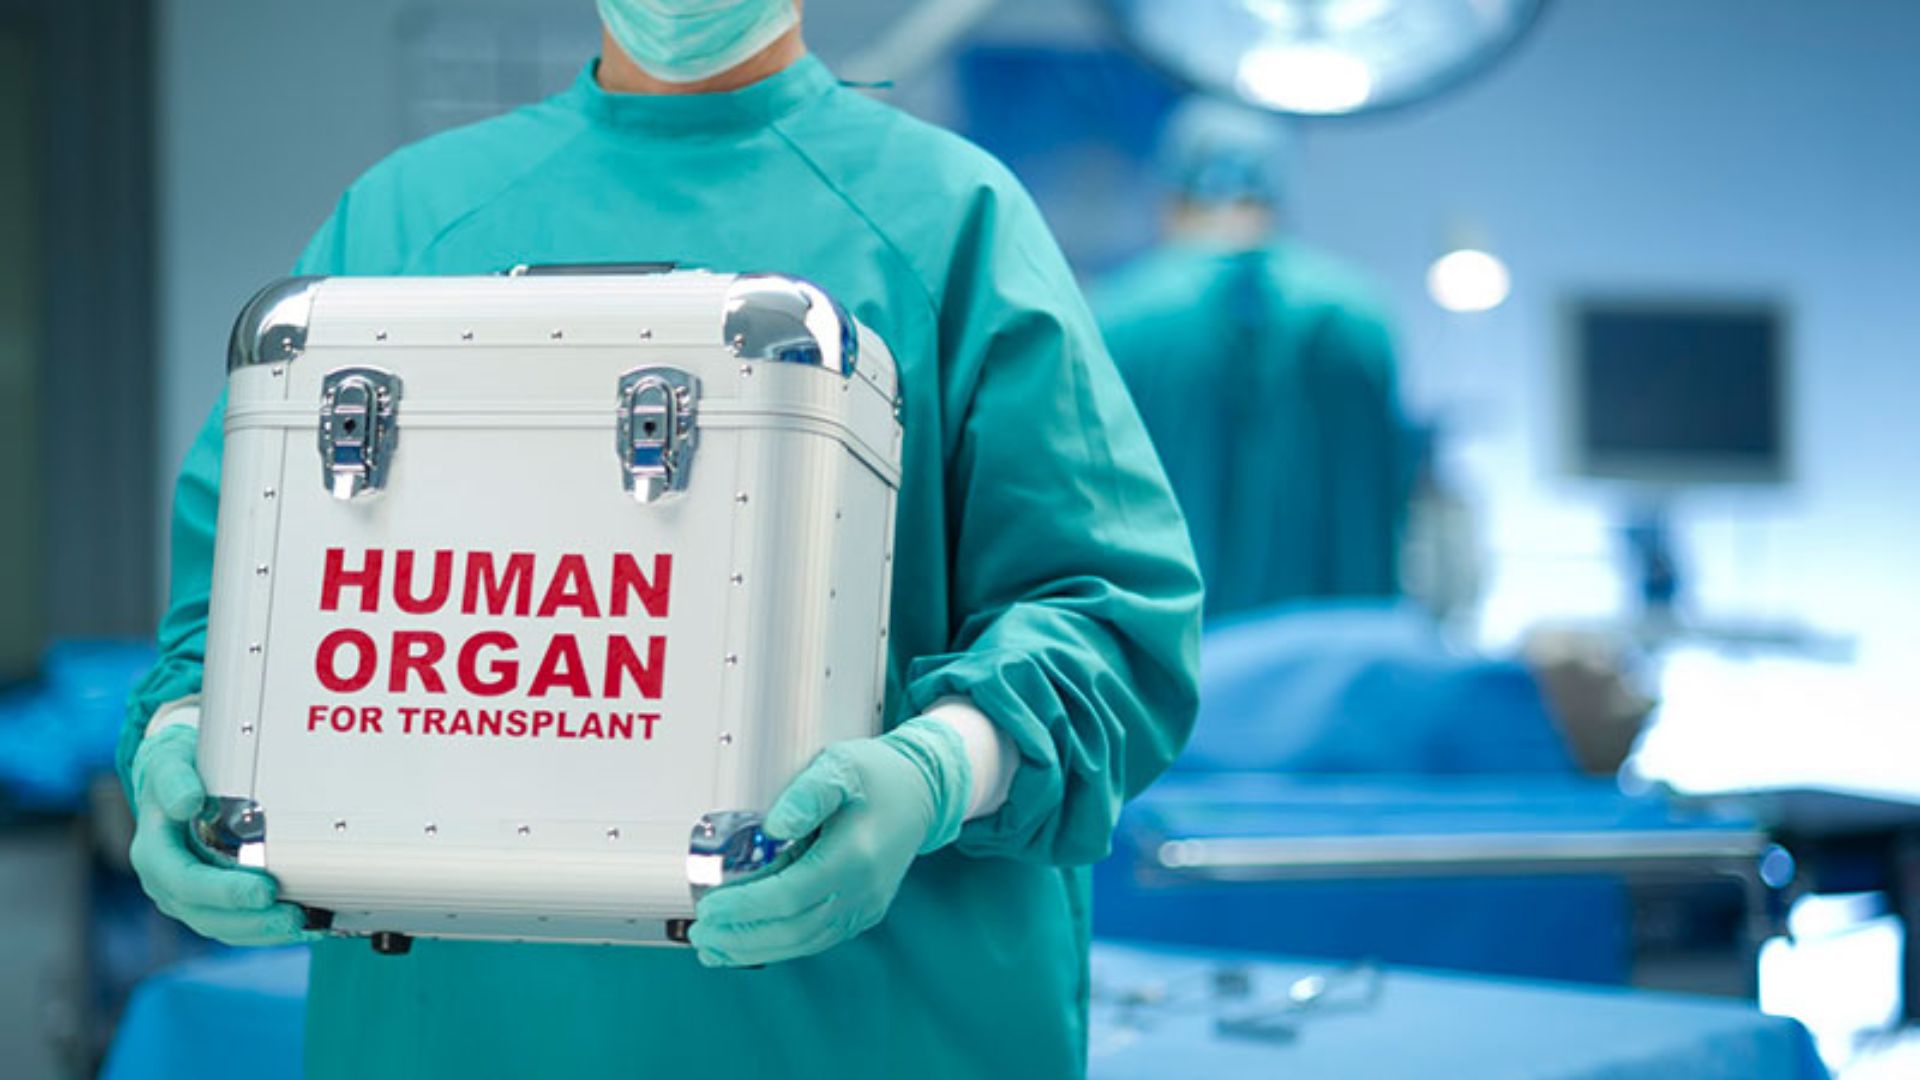 Men Witnessed 80% of The Organ Transplant : Govt Data